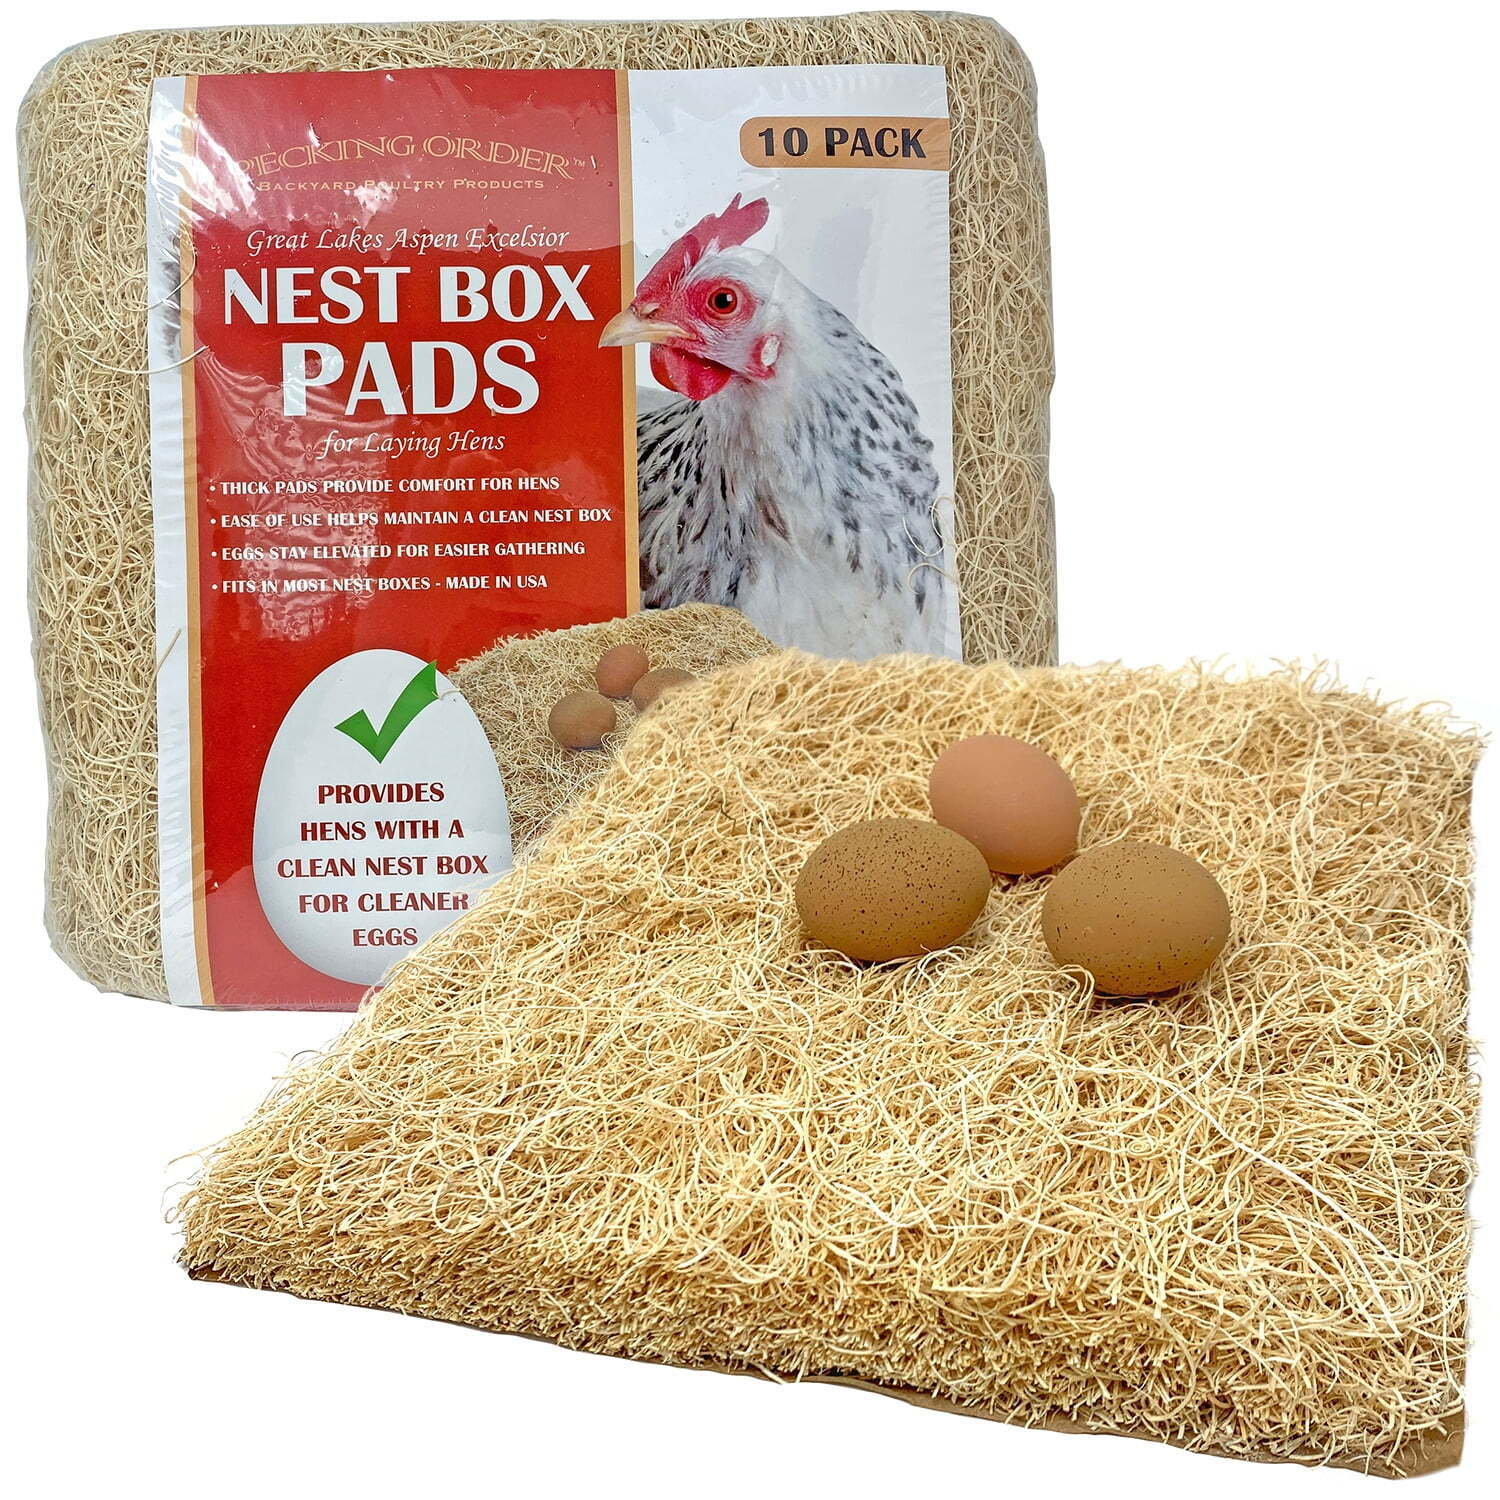 Pecking Order Chicken Nest Box Pads 10 Pack